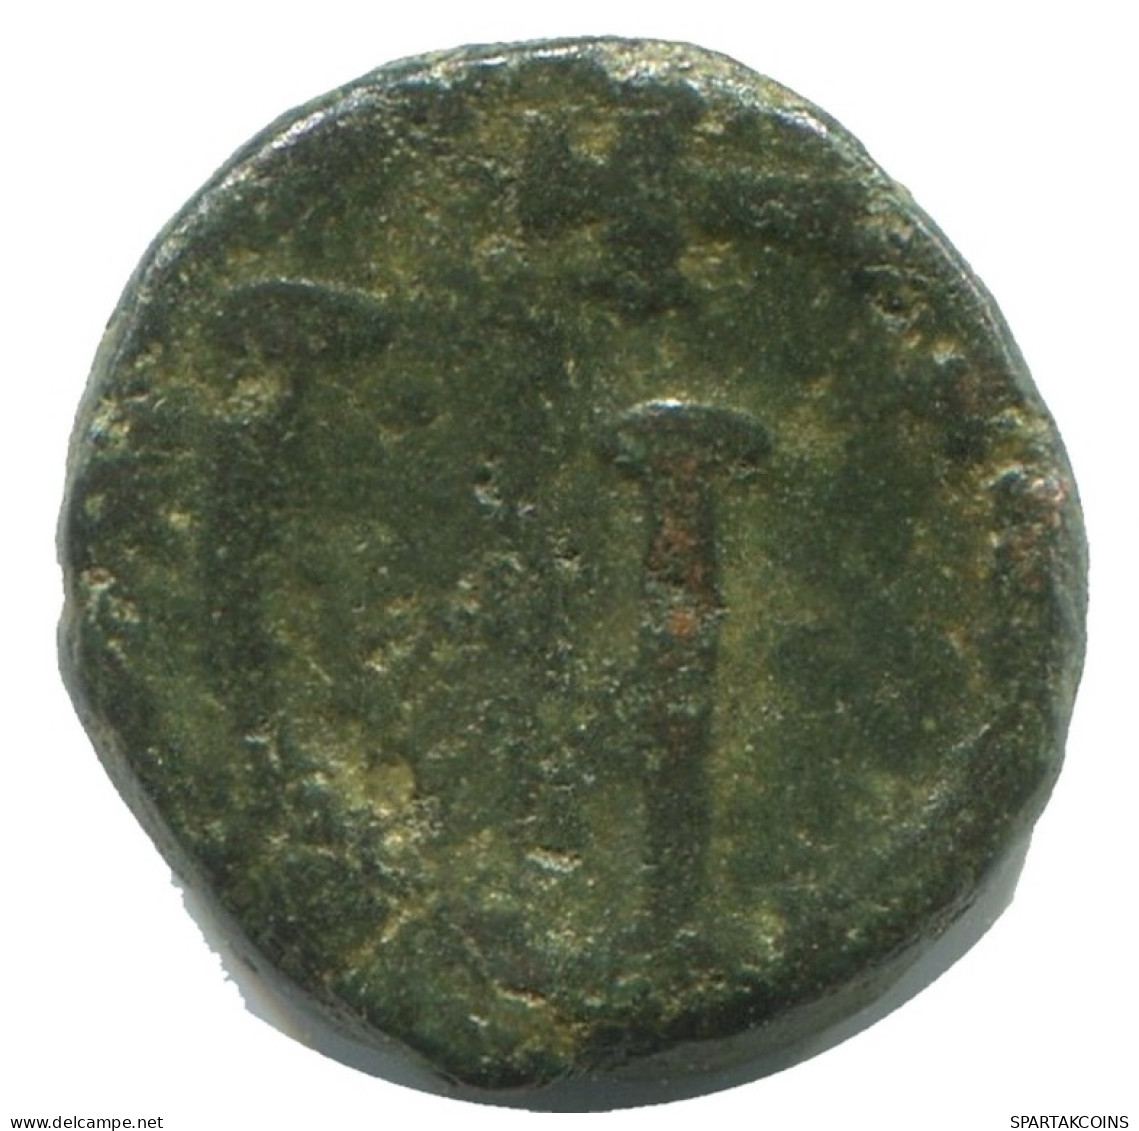 FLAVIUS JUSTINUS II FOLLIS Auténtico Antiguo BYZANTINE Moneda 1.7g/12m #AB439.9.E.A - Byzantines